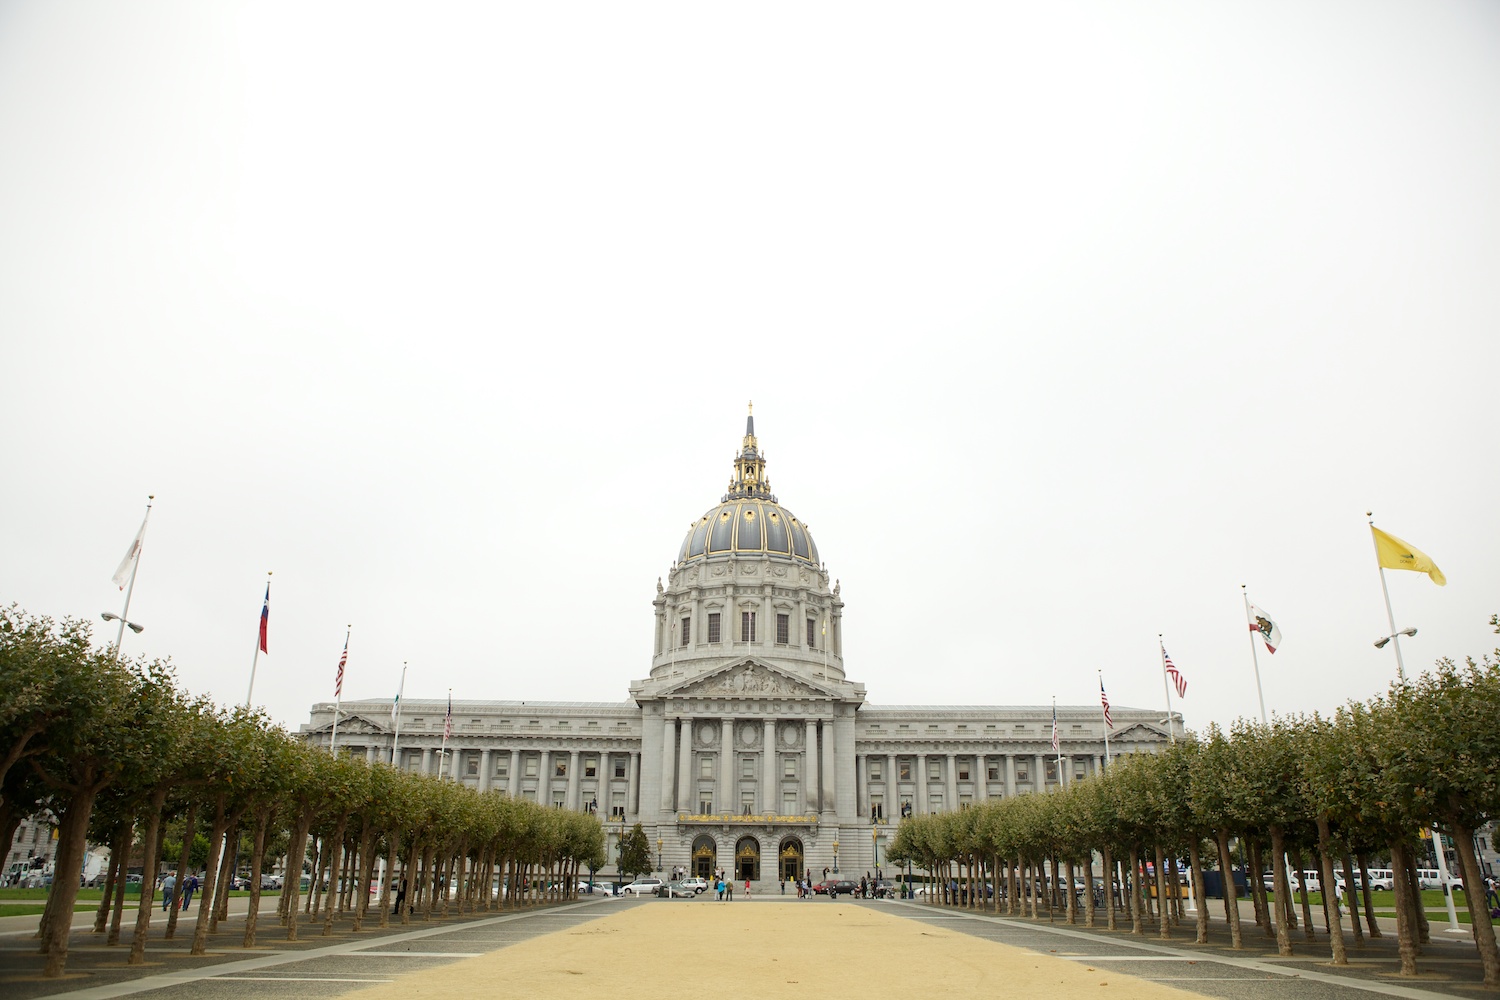 the exterior of San Francisco City Hall